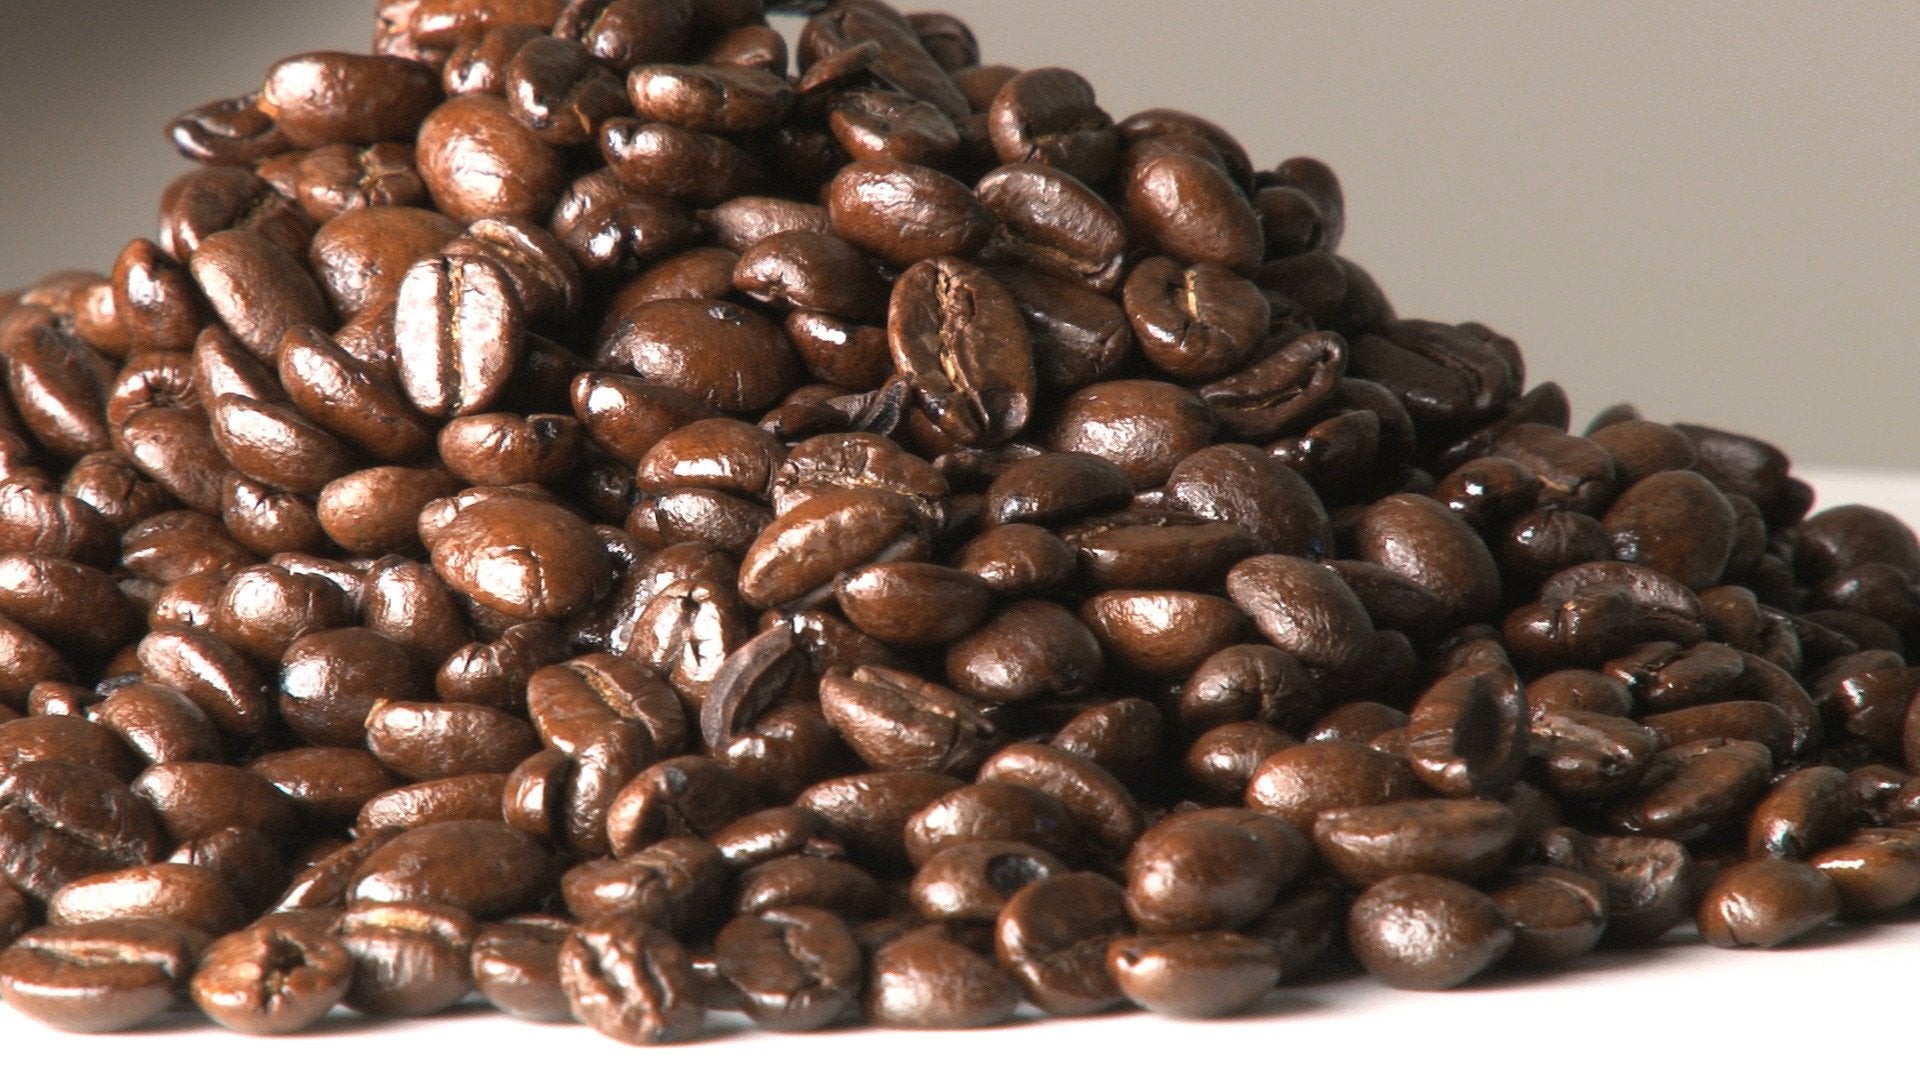 Video: Does Coffee Raise Cholesterol?